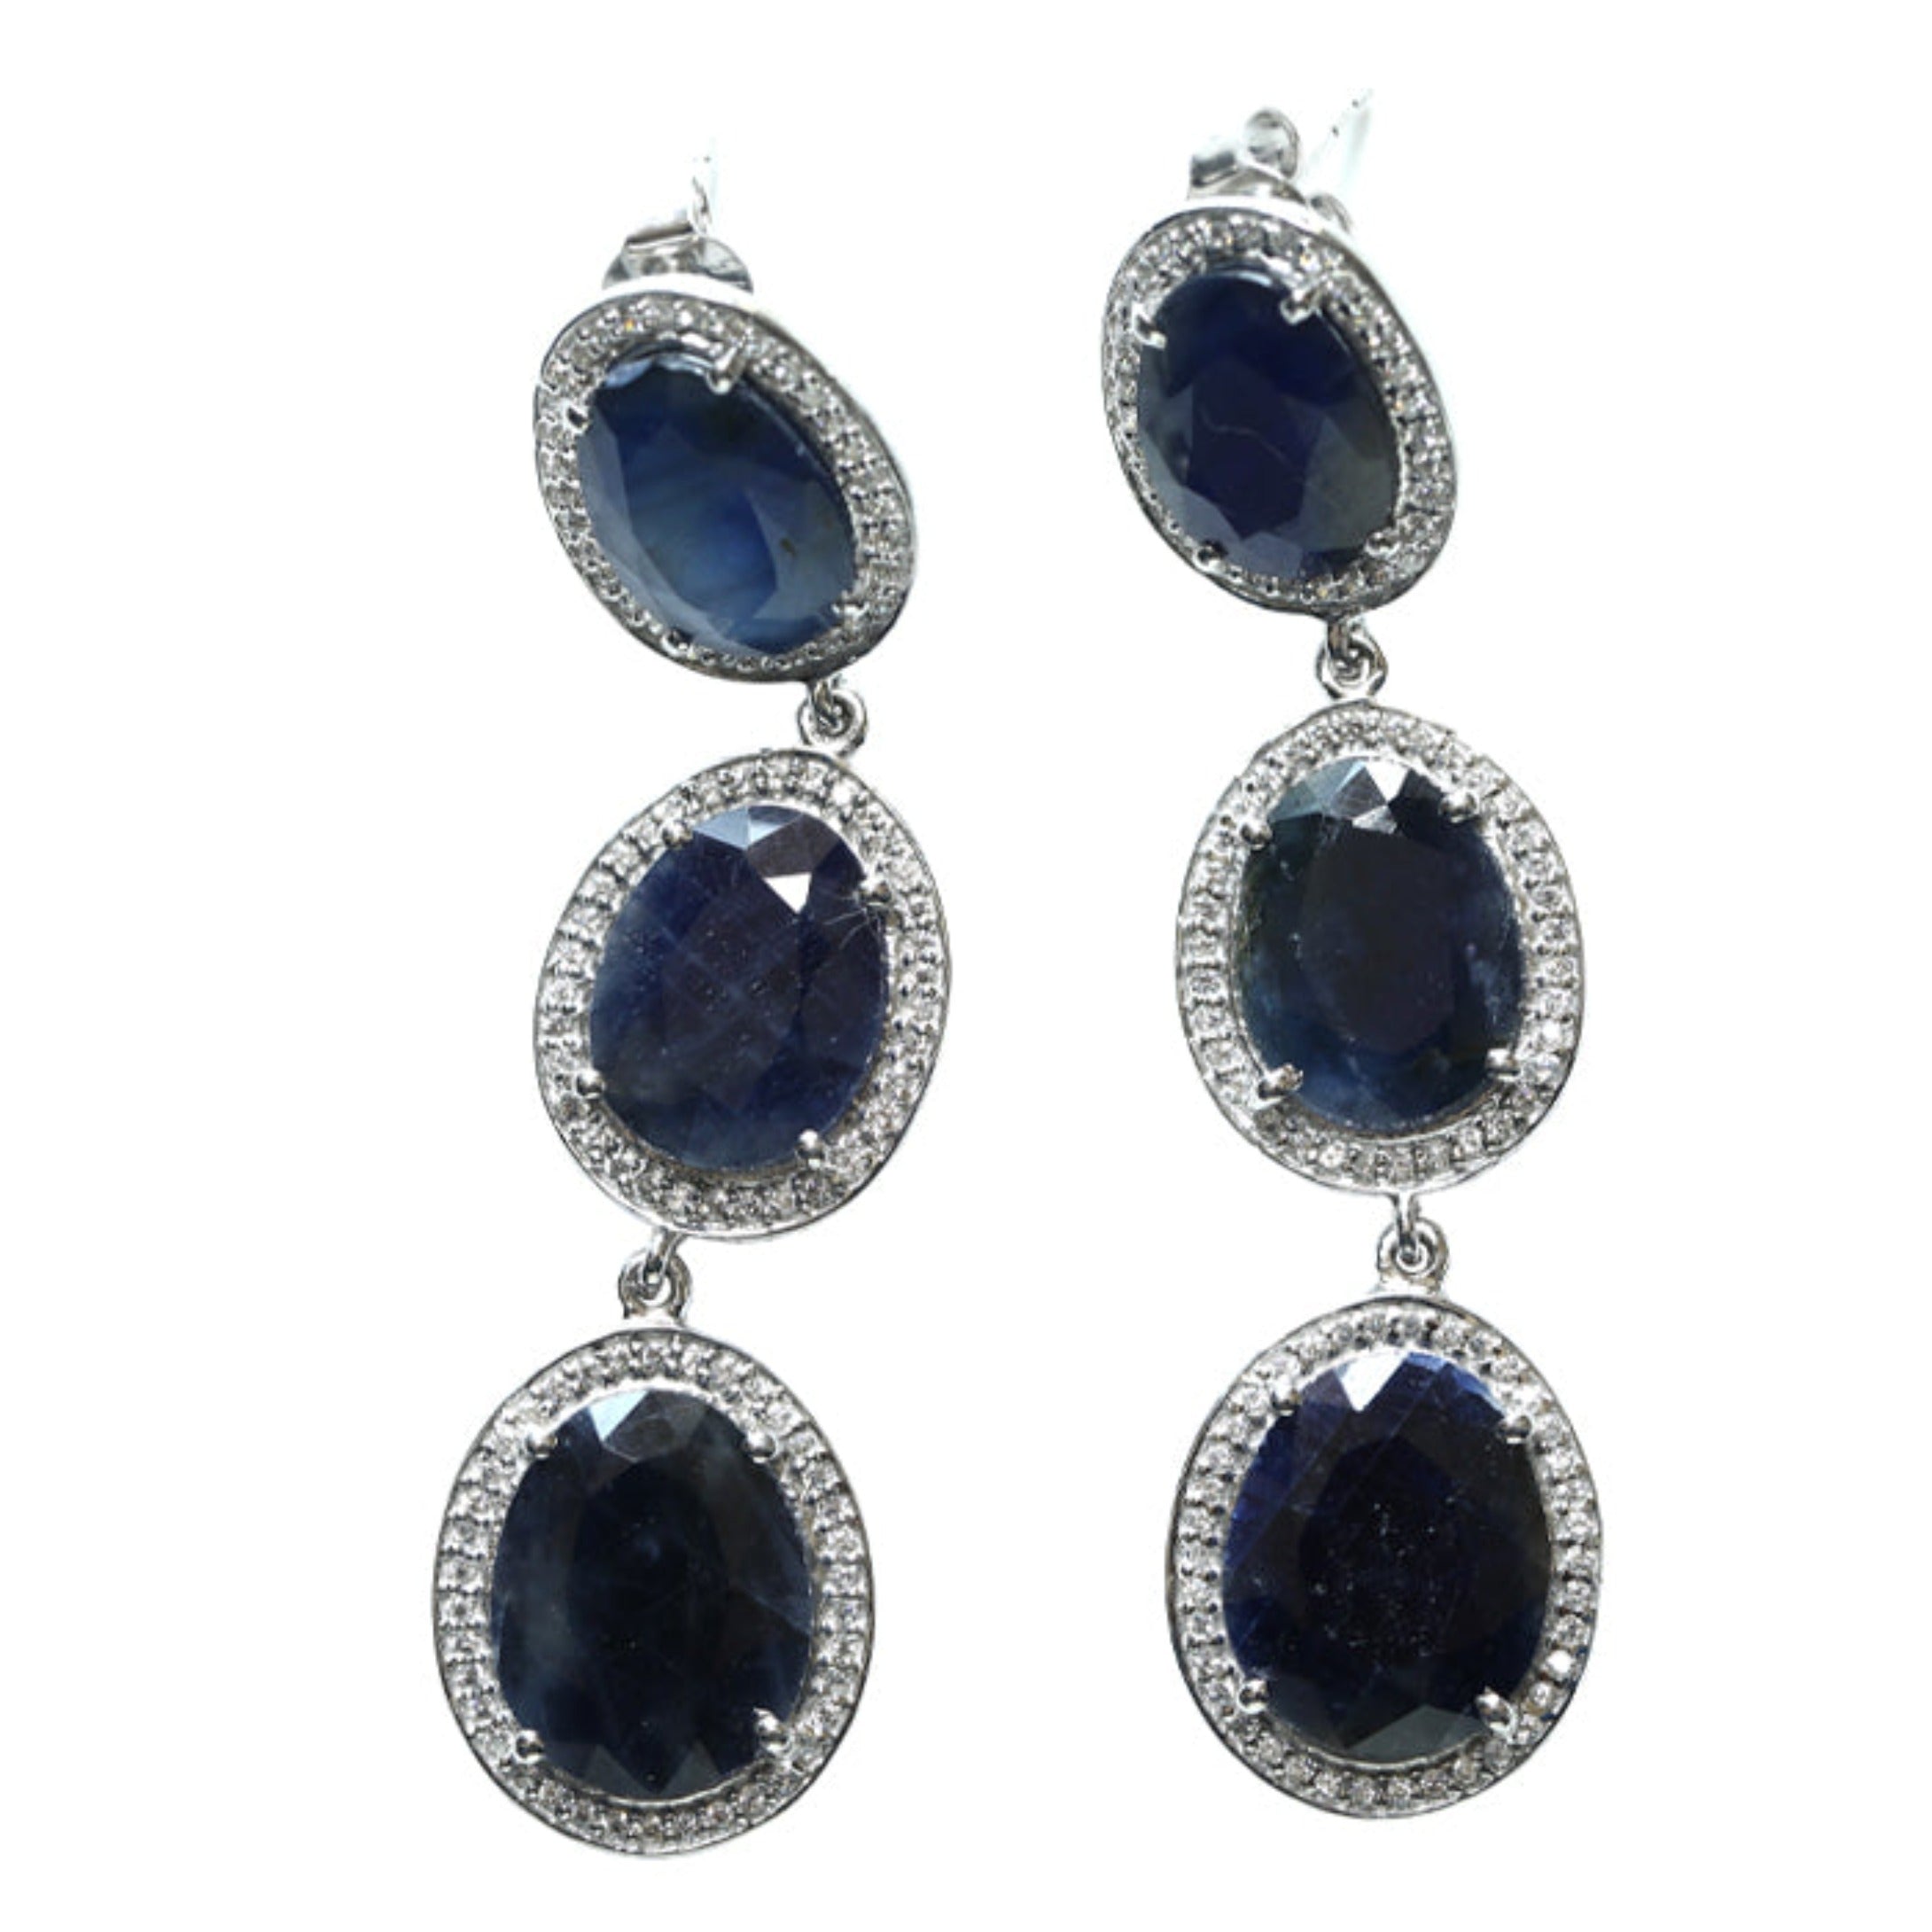 Blisse Allure 925 Sterling Silver Blue Sapphire Cz Dangler Earrings For Women